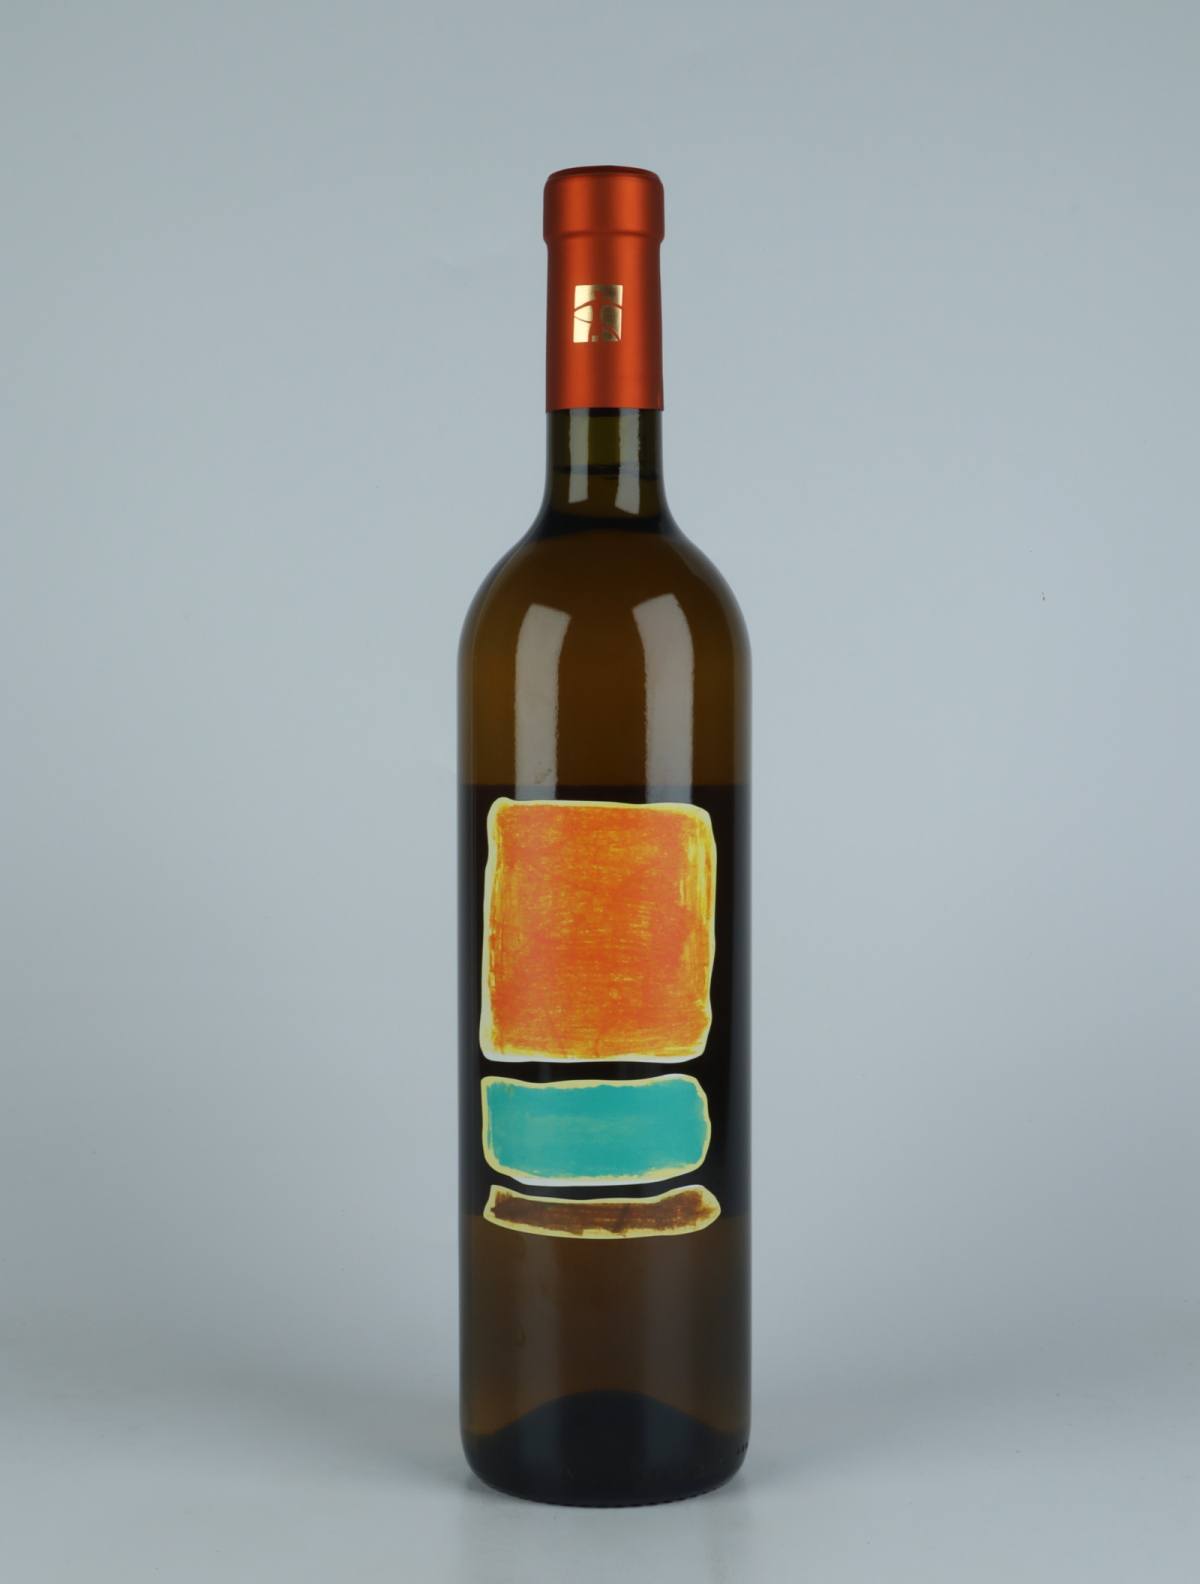 En flaske 2020 Rucantù Orange vin fra Tenuta Selvadolce, Ligurien i Italien